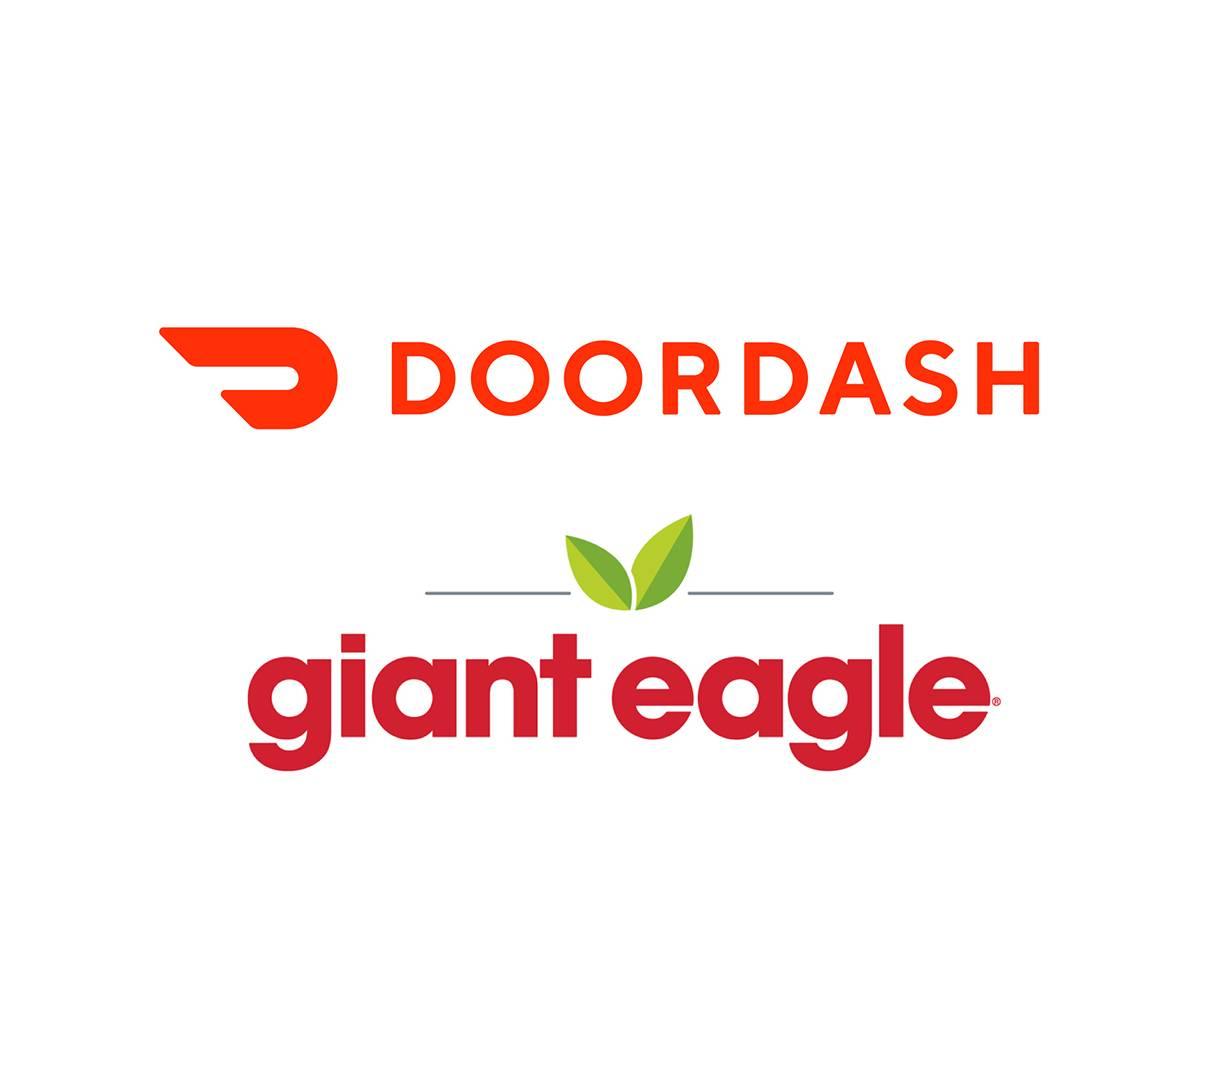 DoorDash Giant Eagle